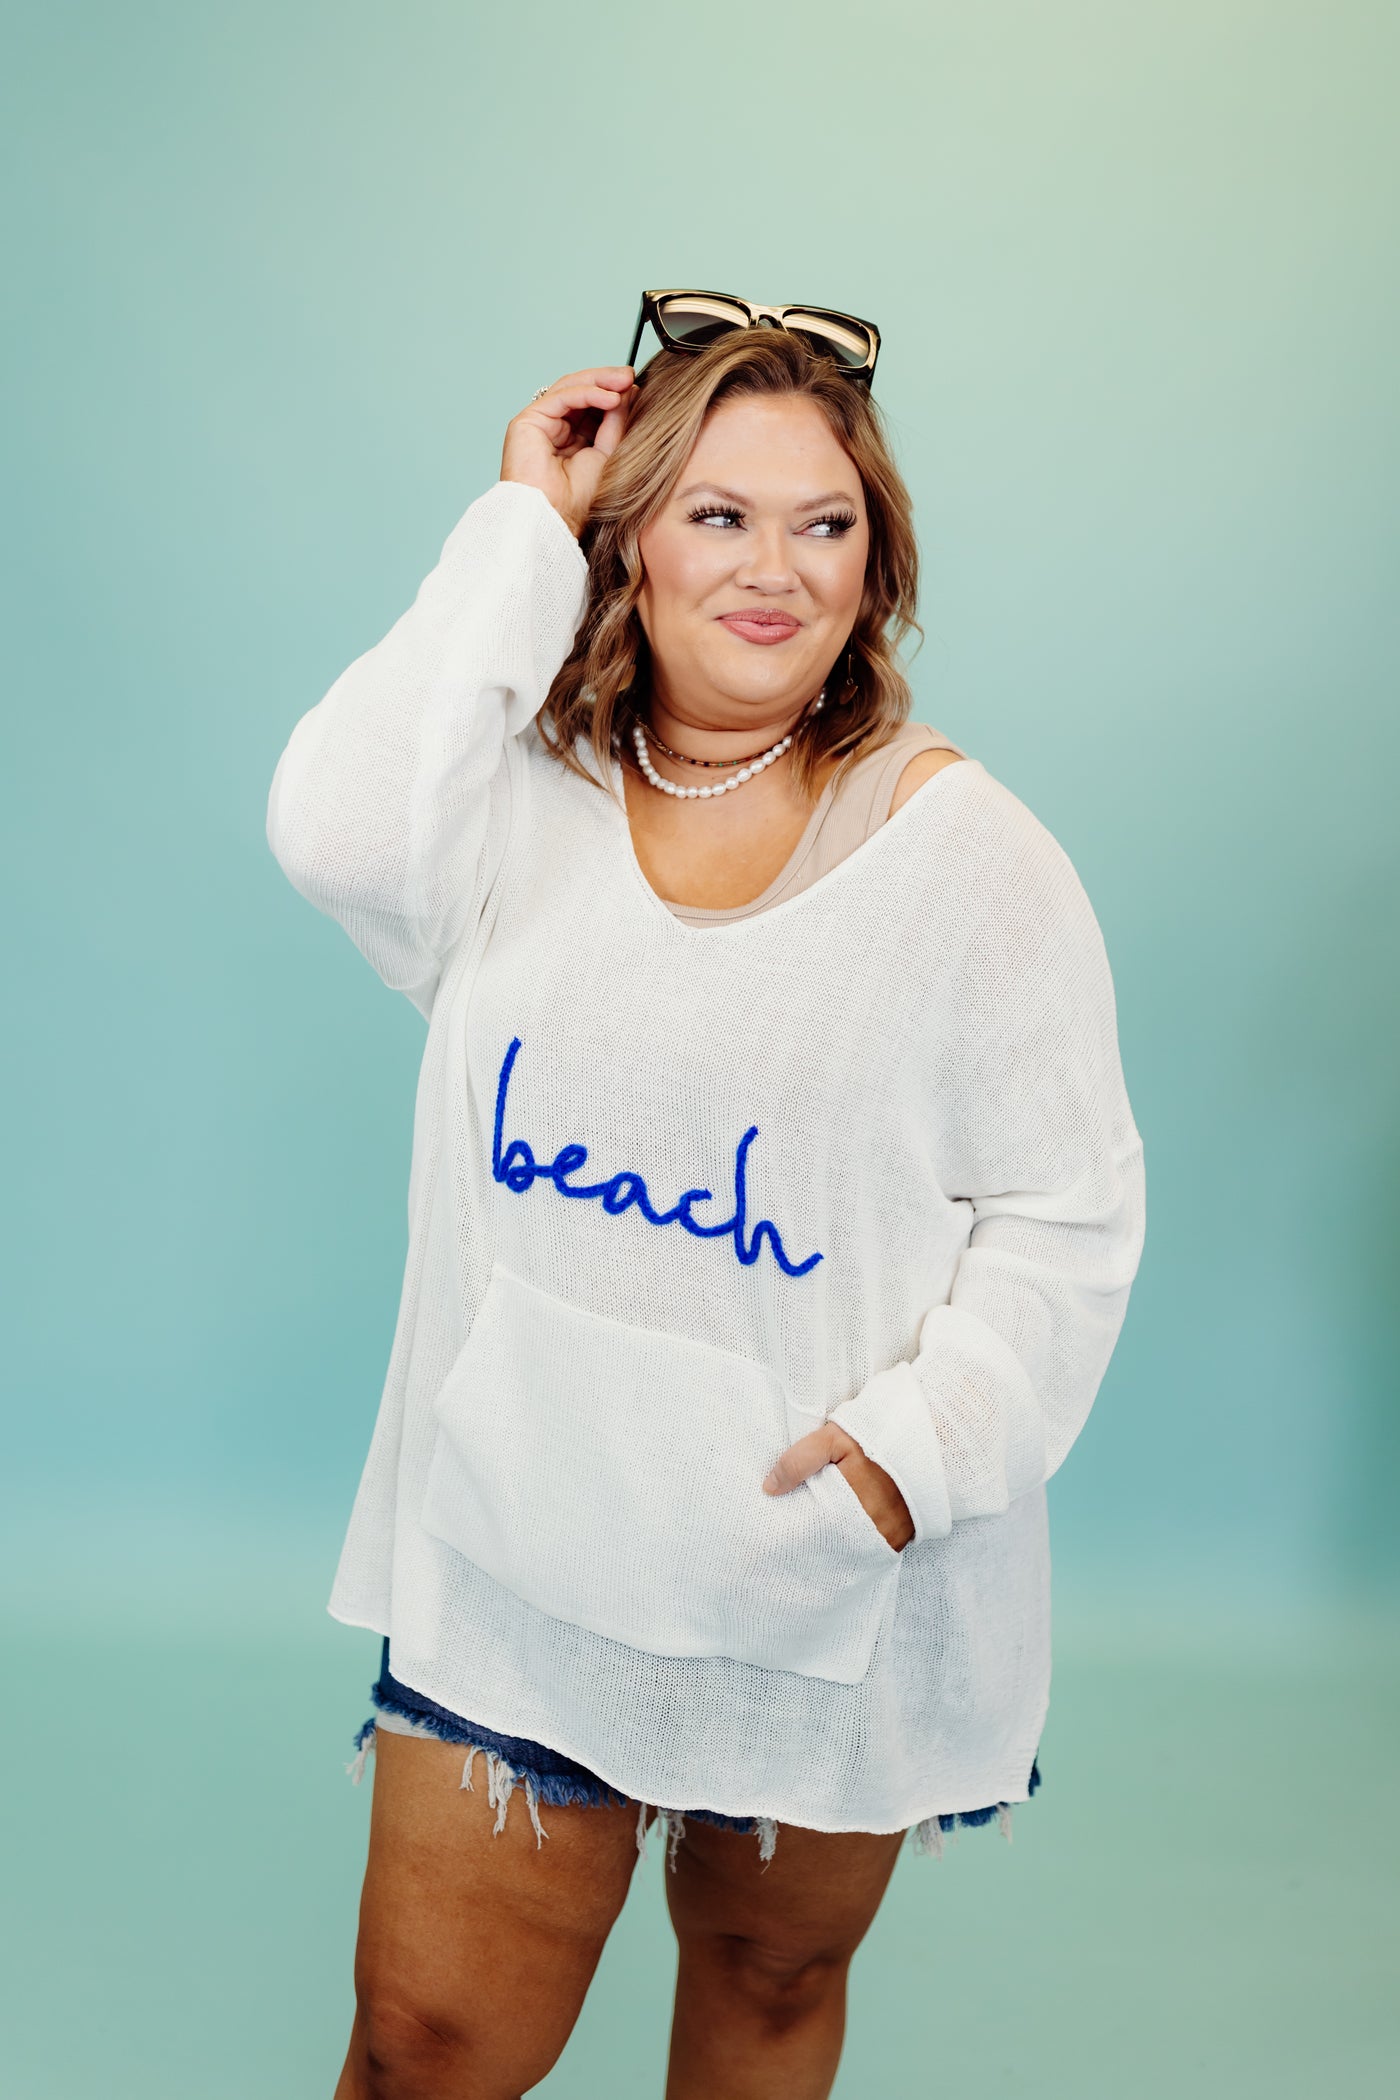 White Knit Beach Script Oversized Pullover